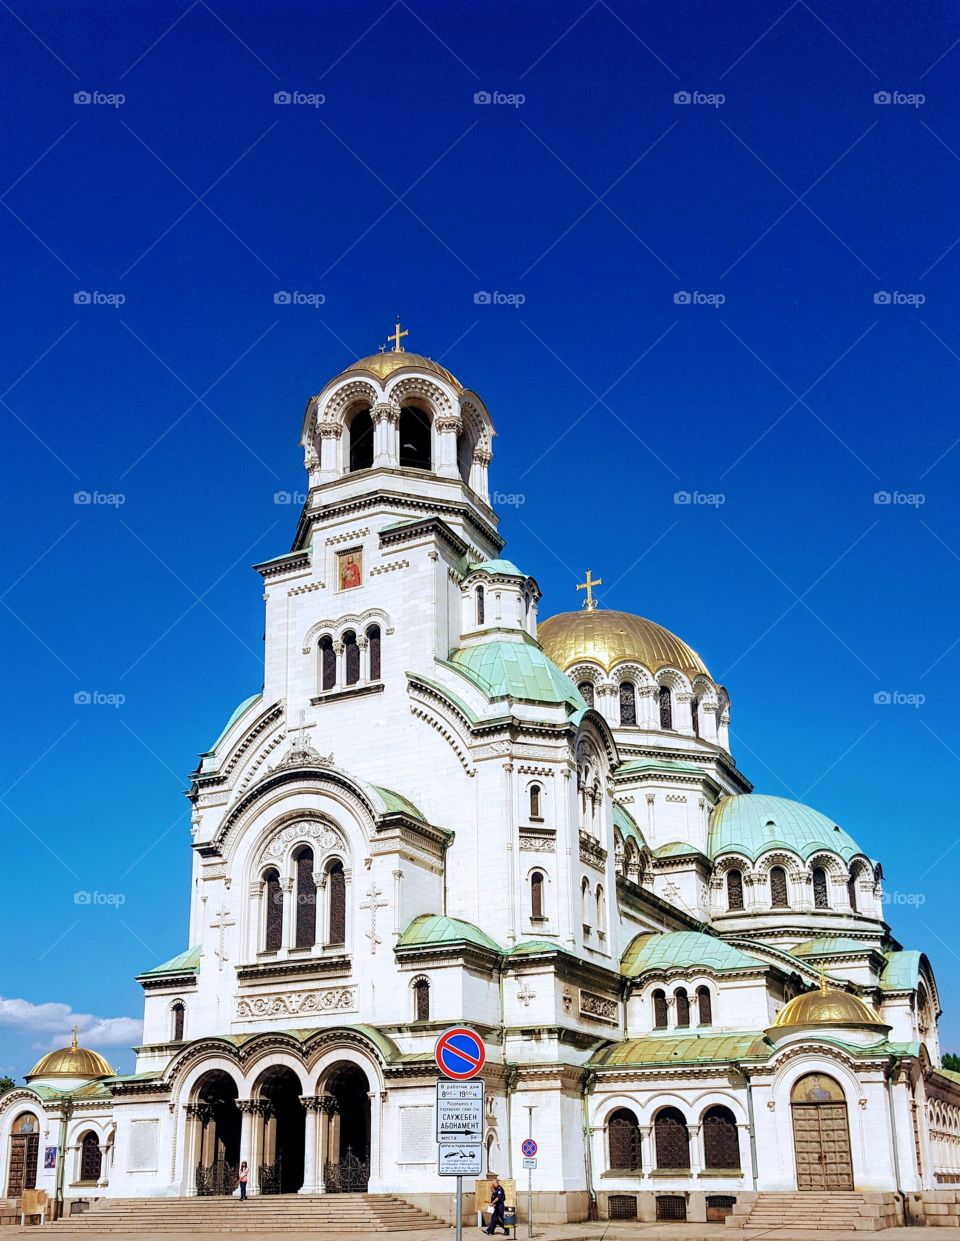 Alwxander Nevski cathedral 